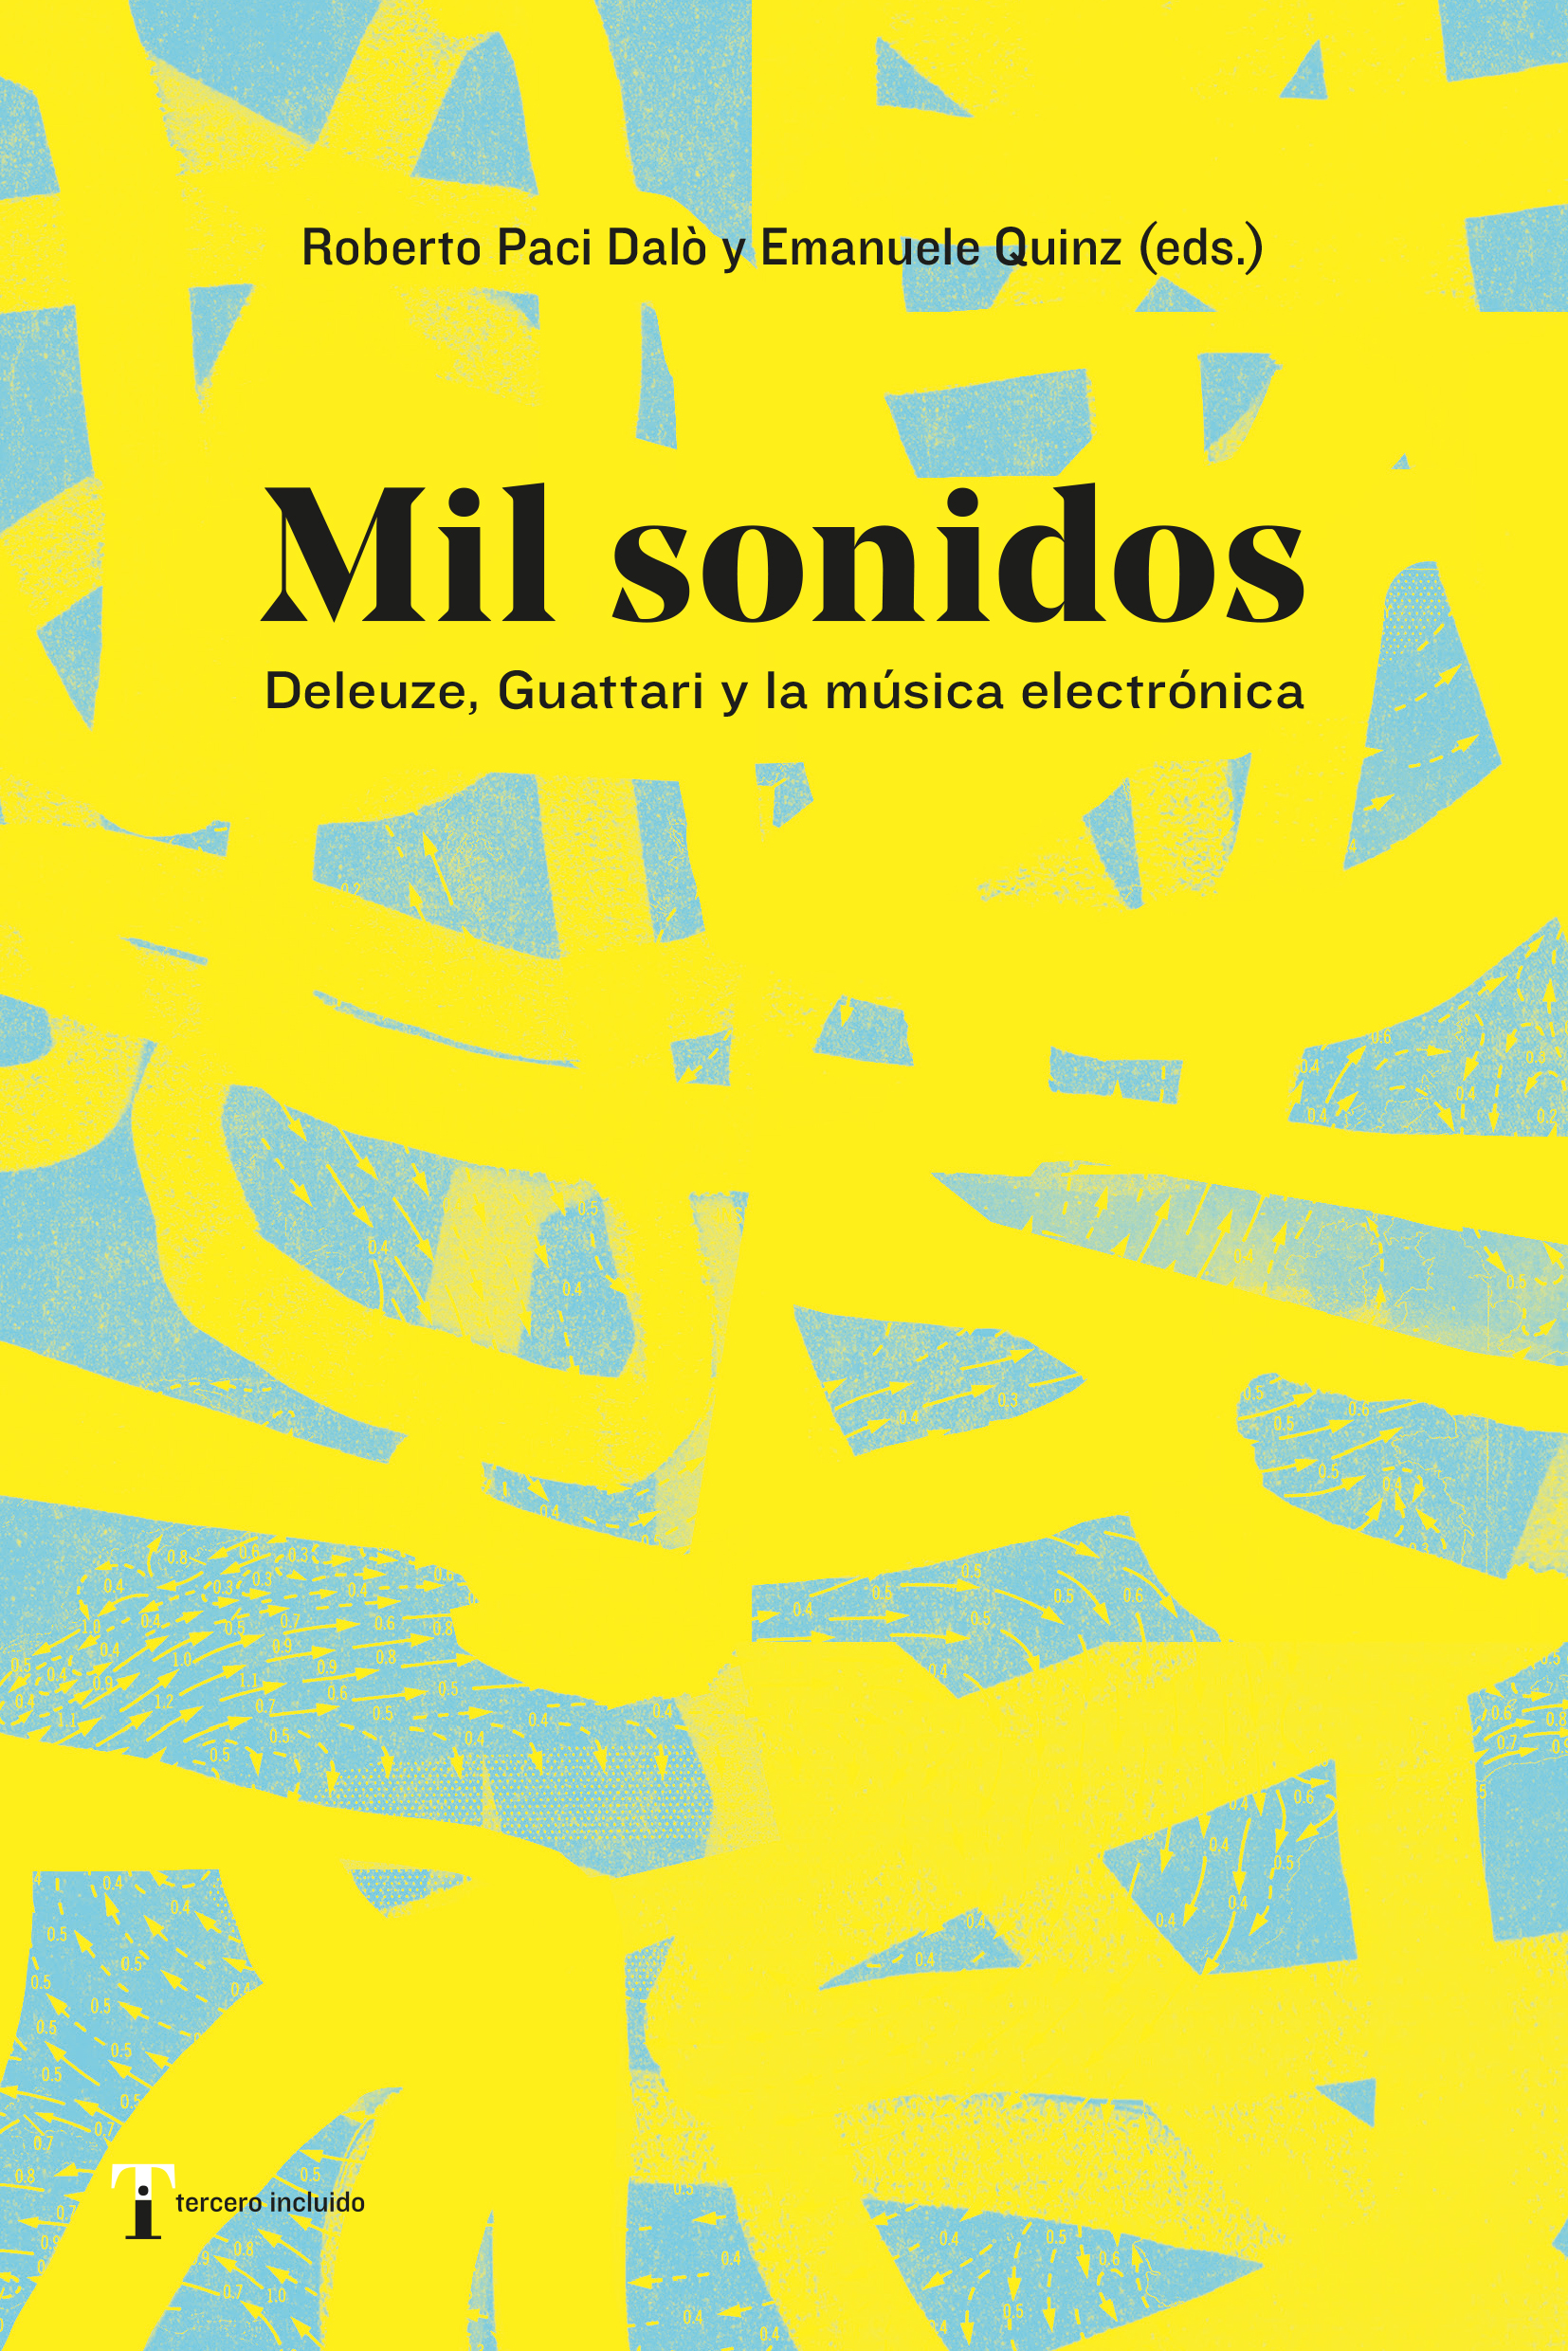 MIL SONIDOS - Roberto Paci Dalò | Emanuele Quinz (eds.)